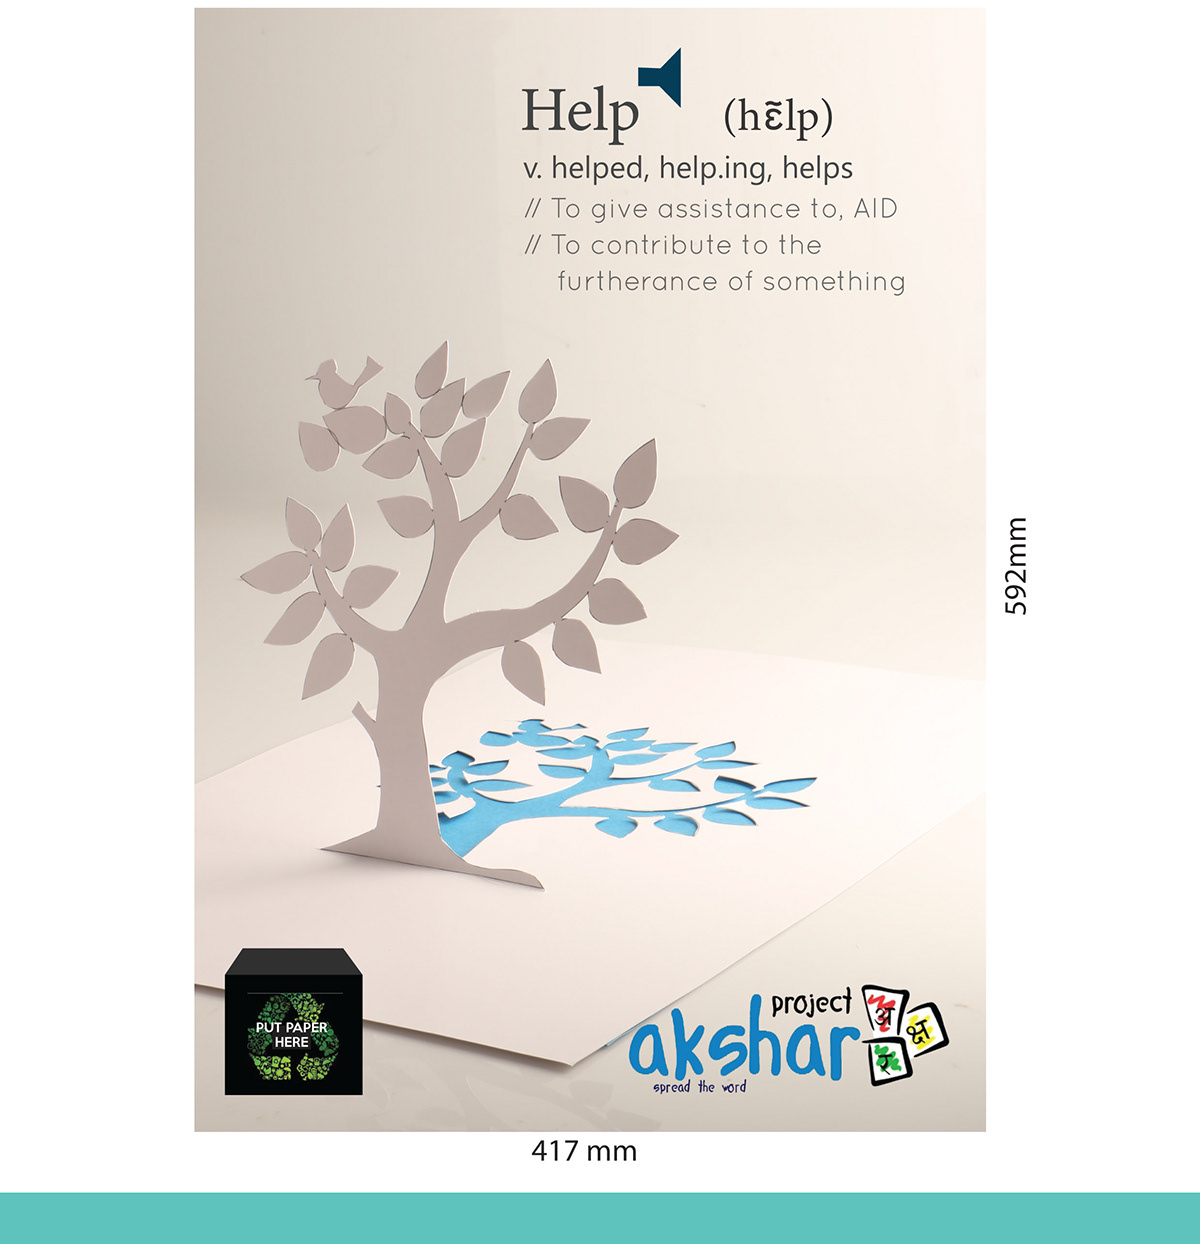 social cause promotional campaign project akshar